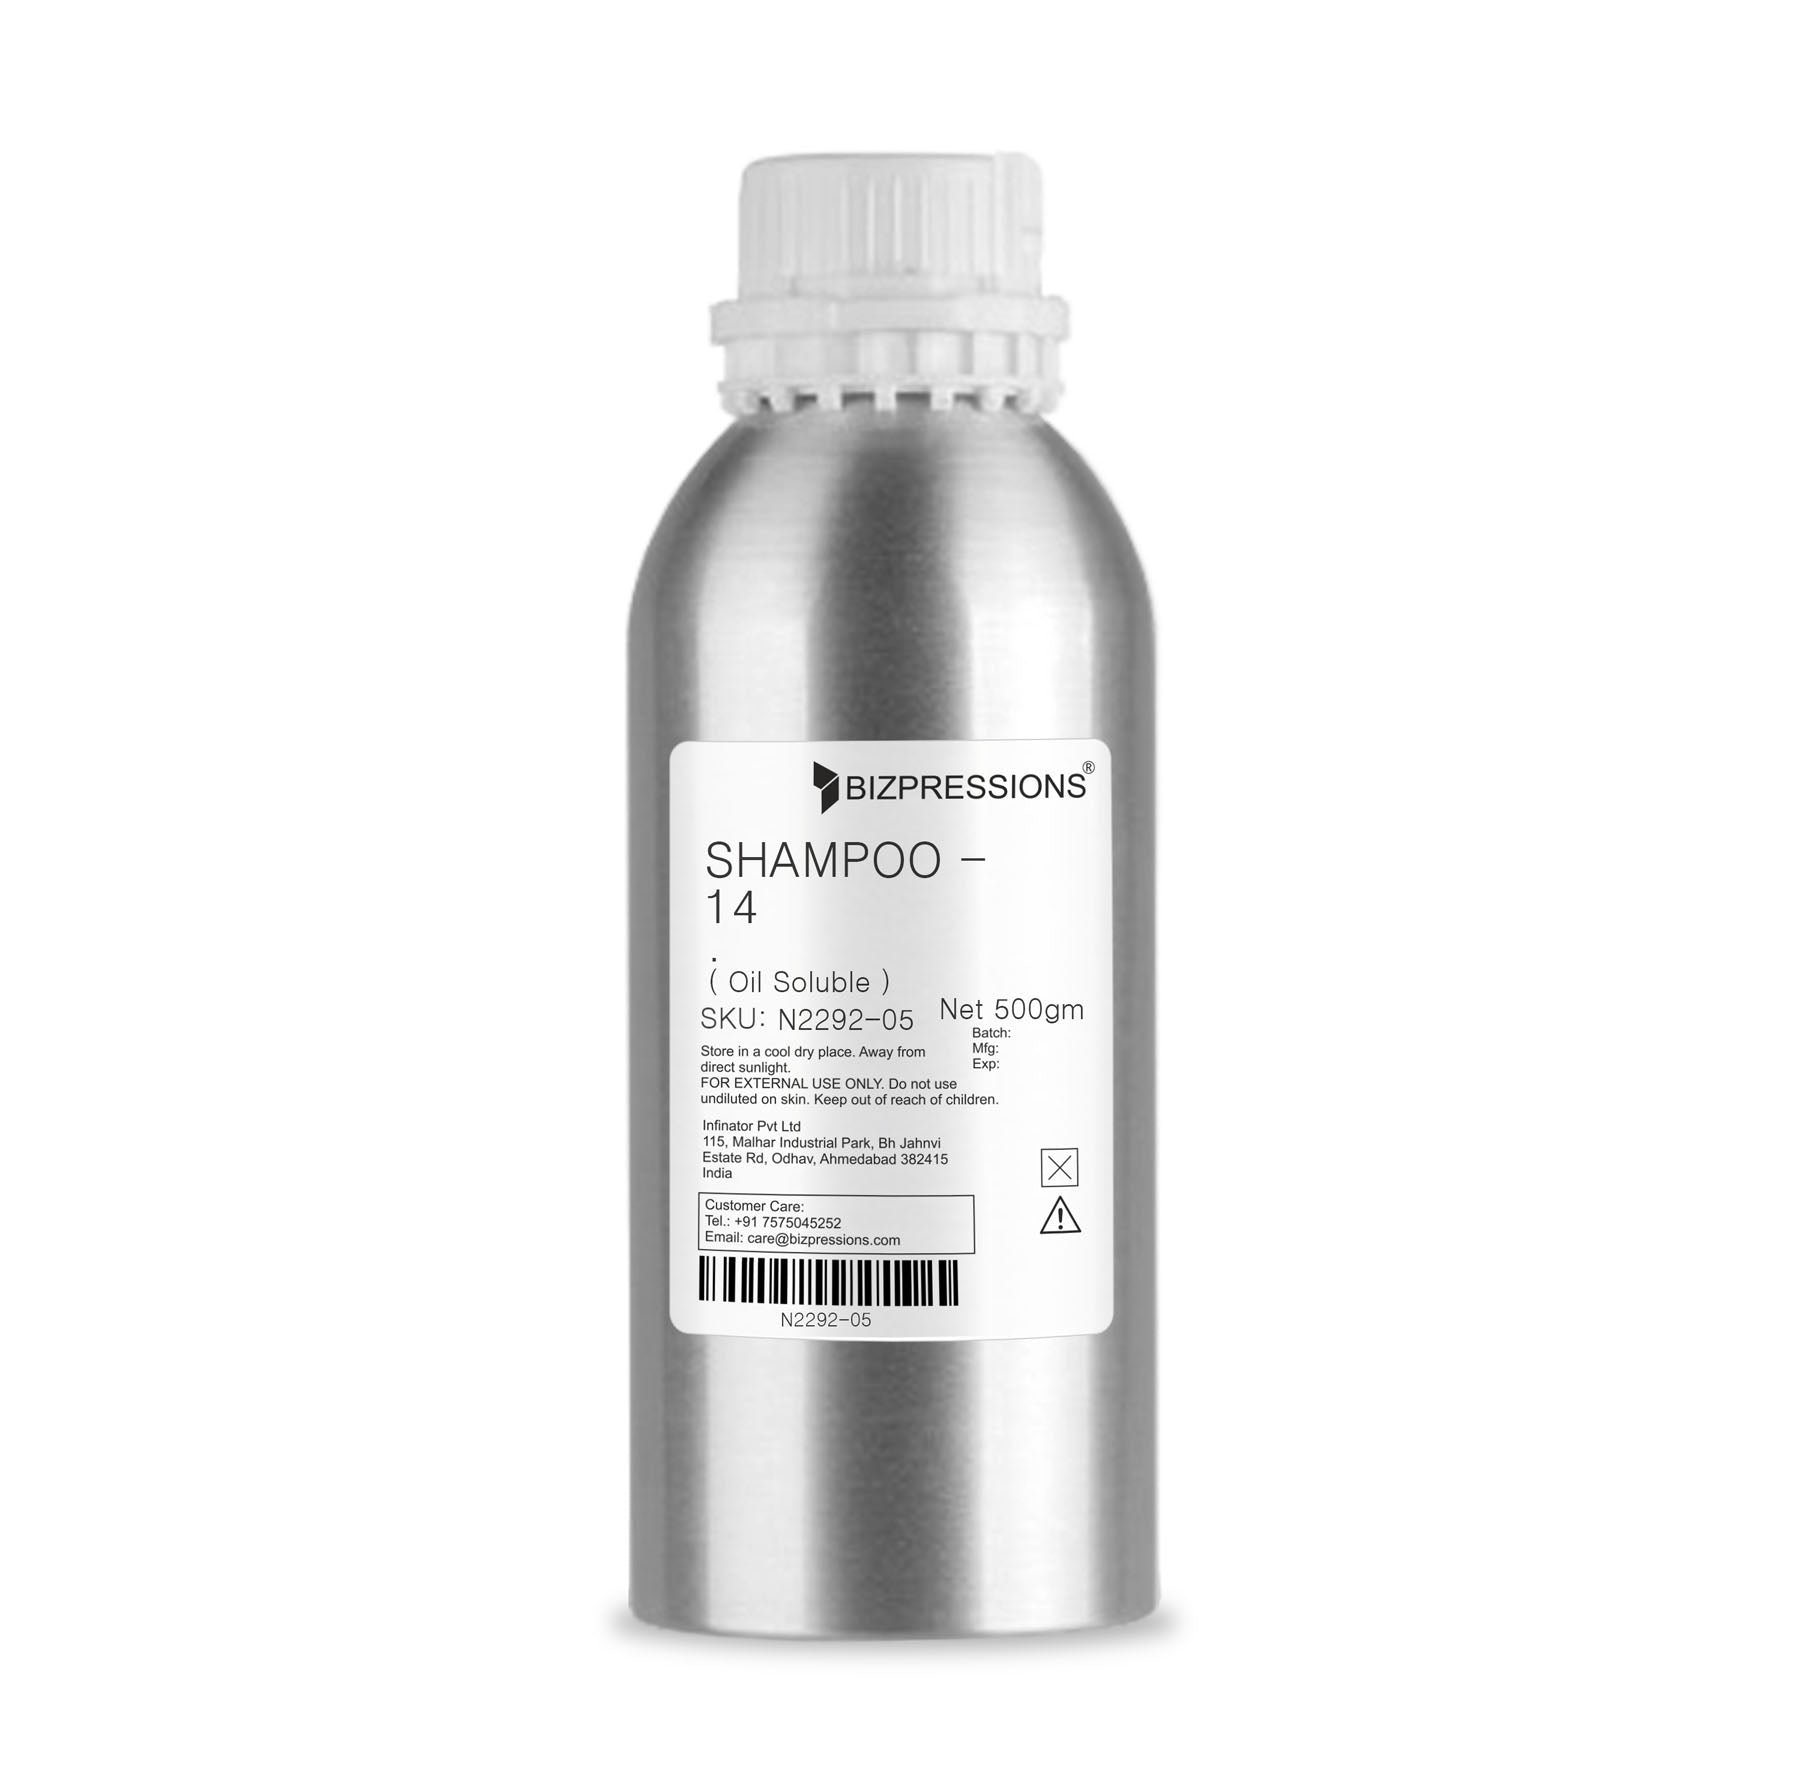 SHAMPOO - 14 - Fragrance ( Oil Soluble ) - 500 gm